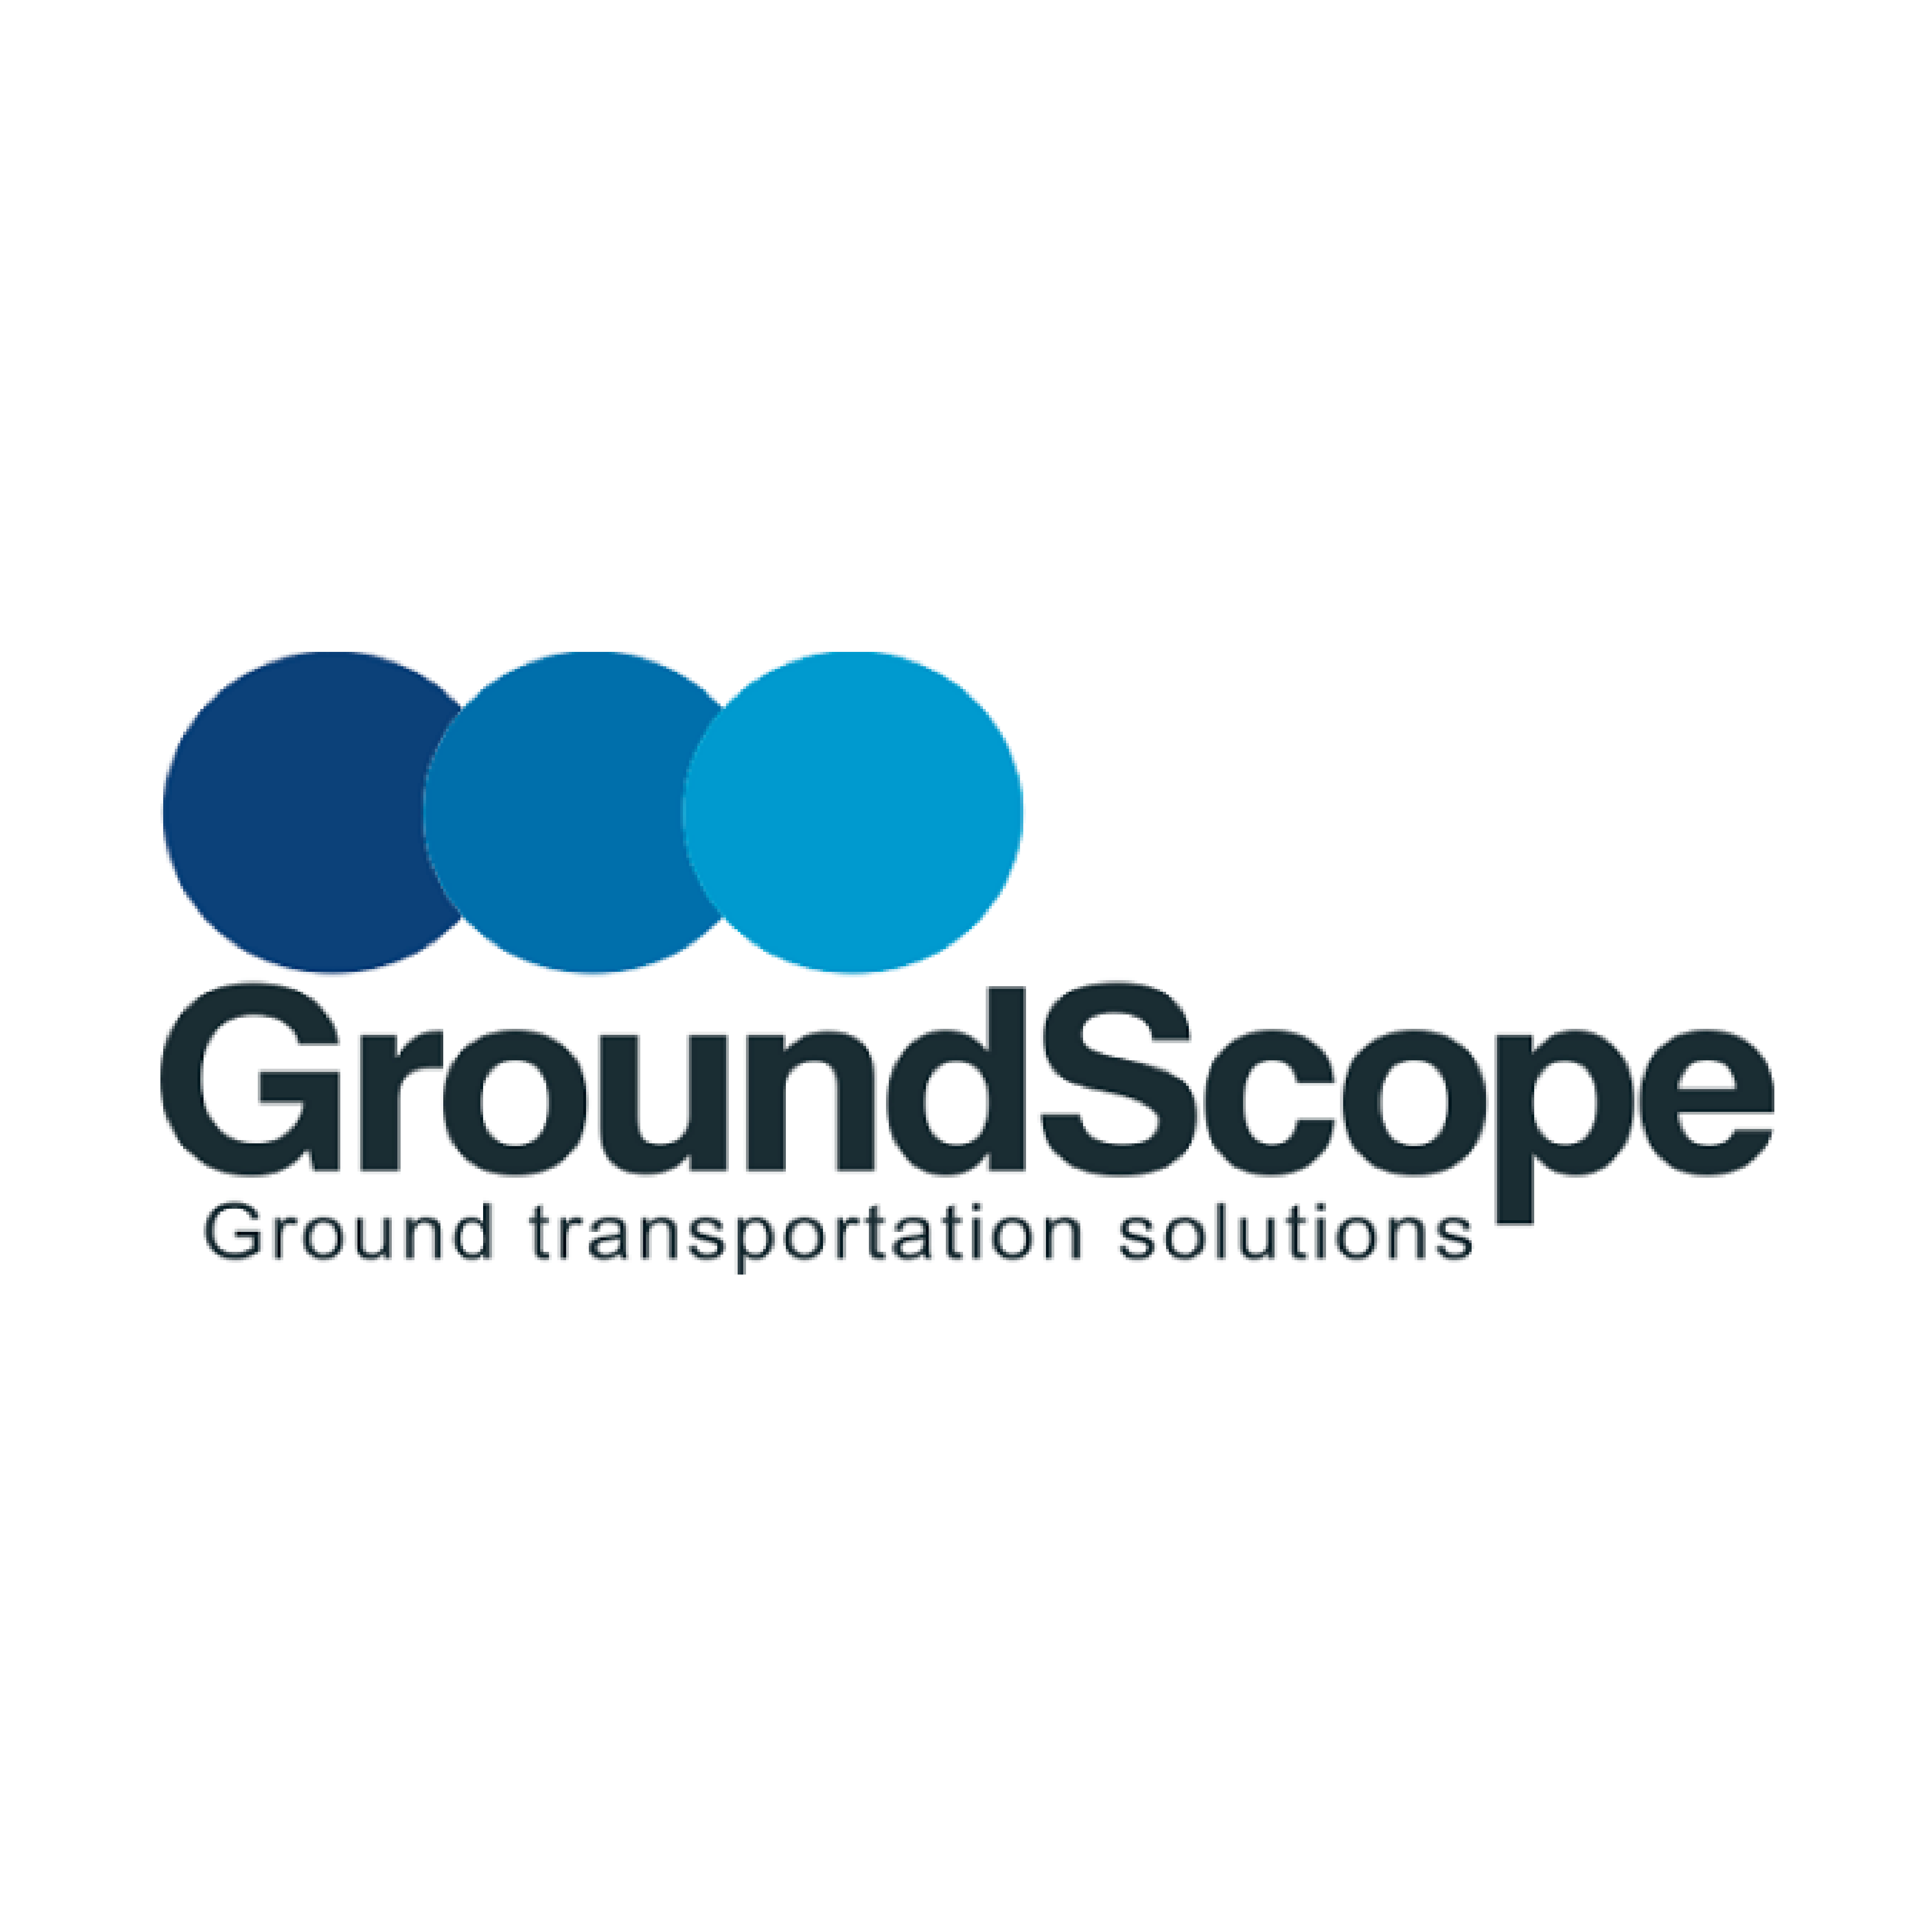 Groundscope